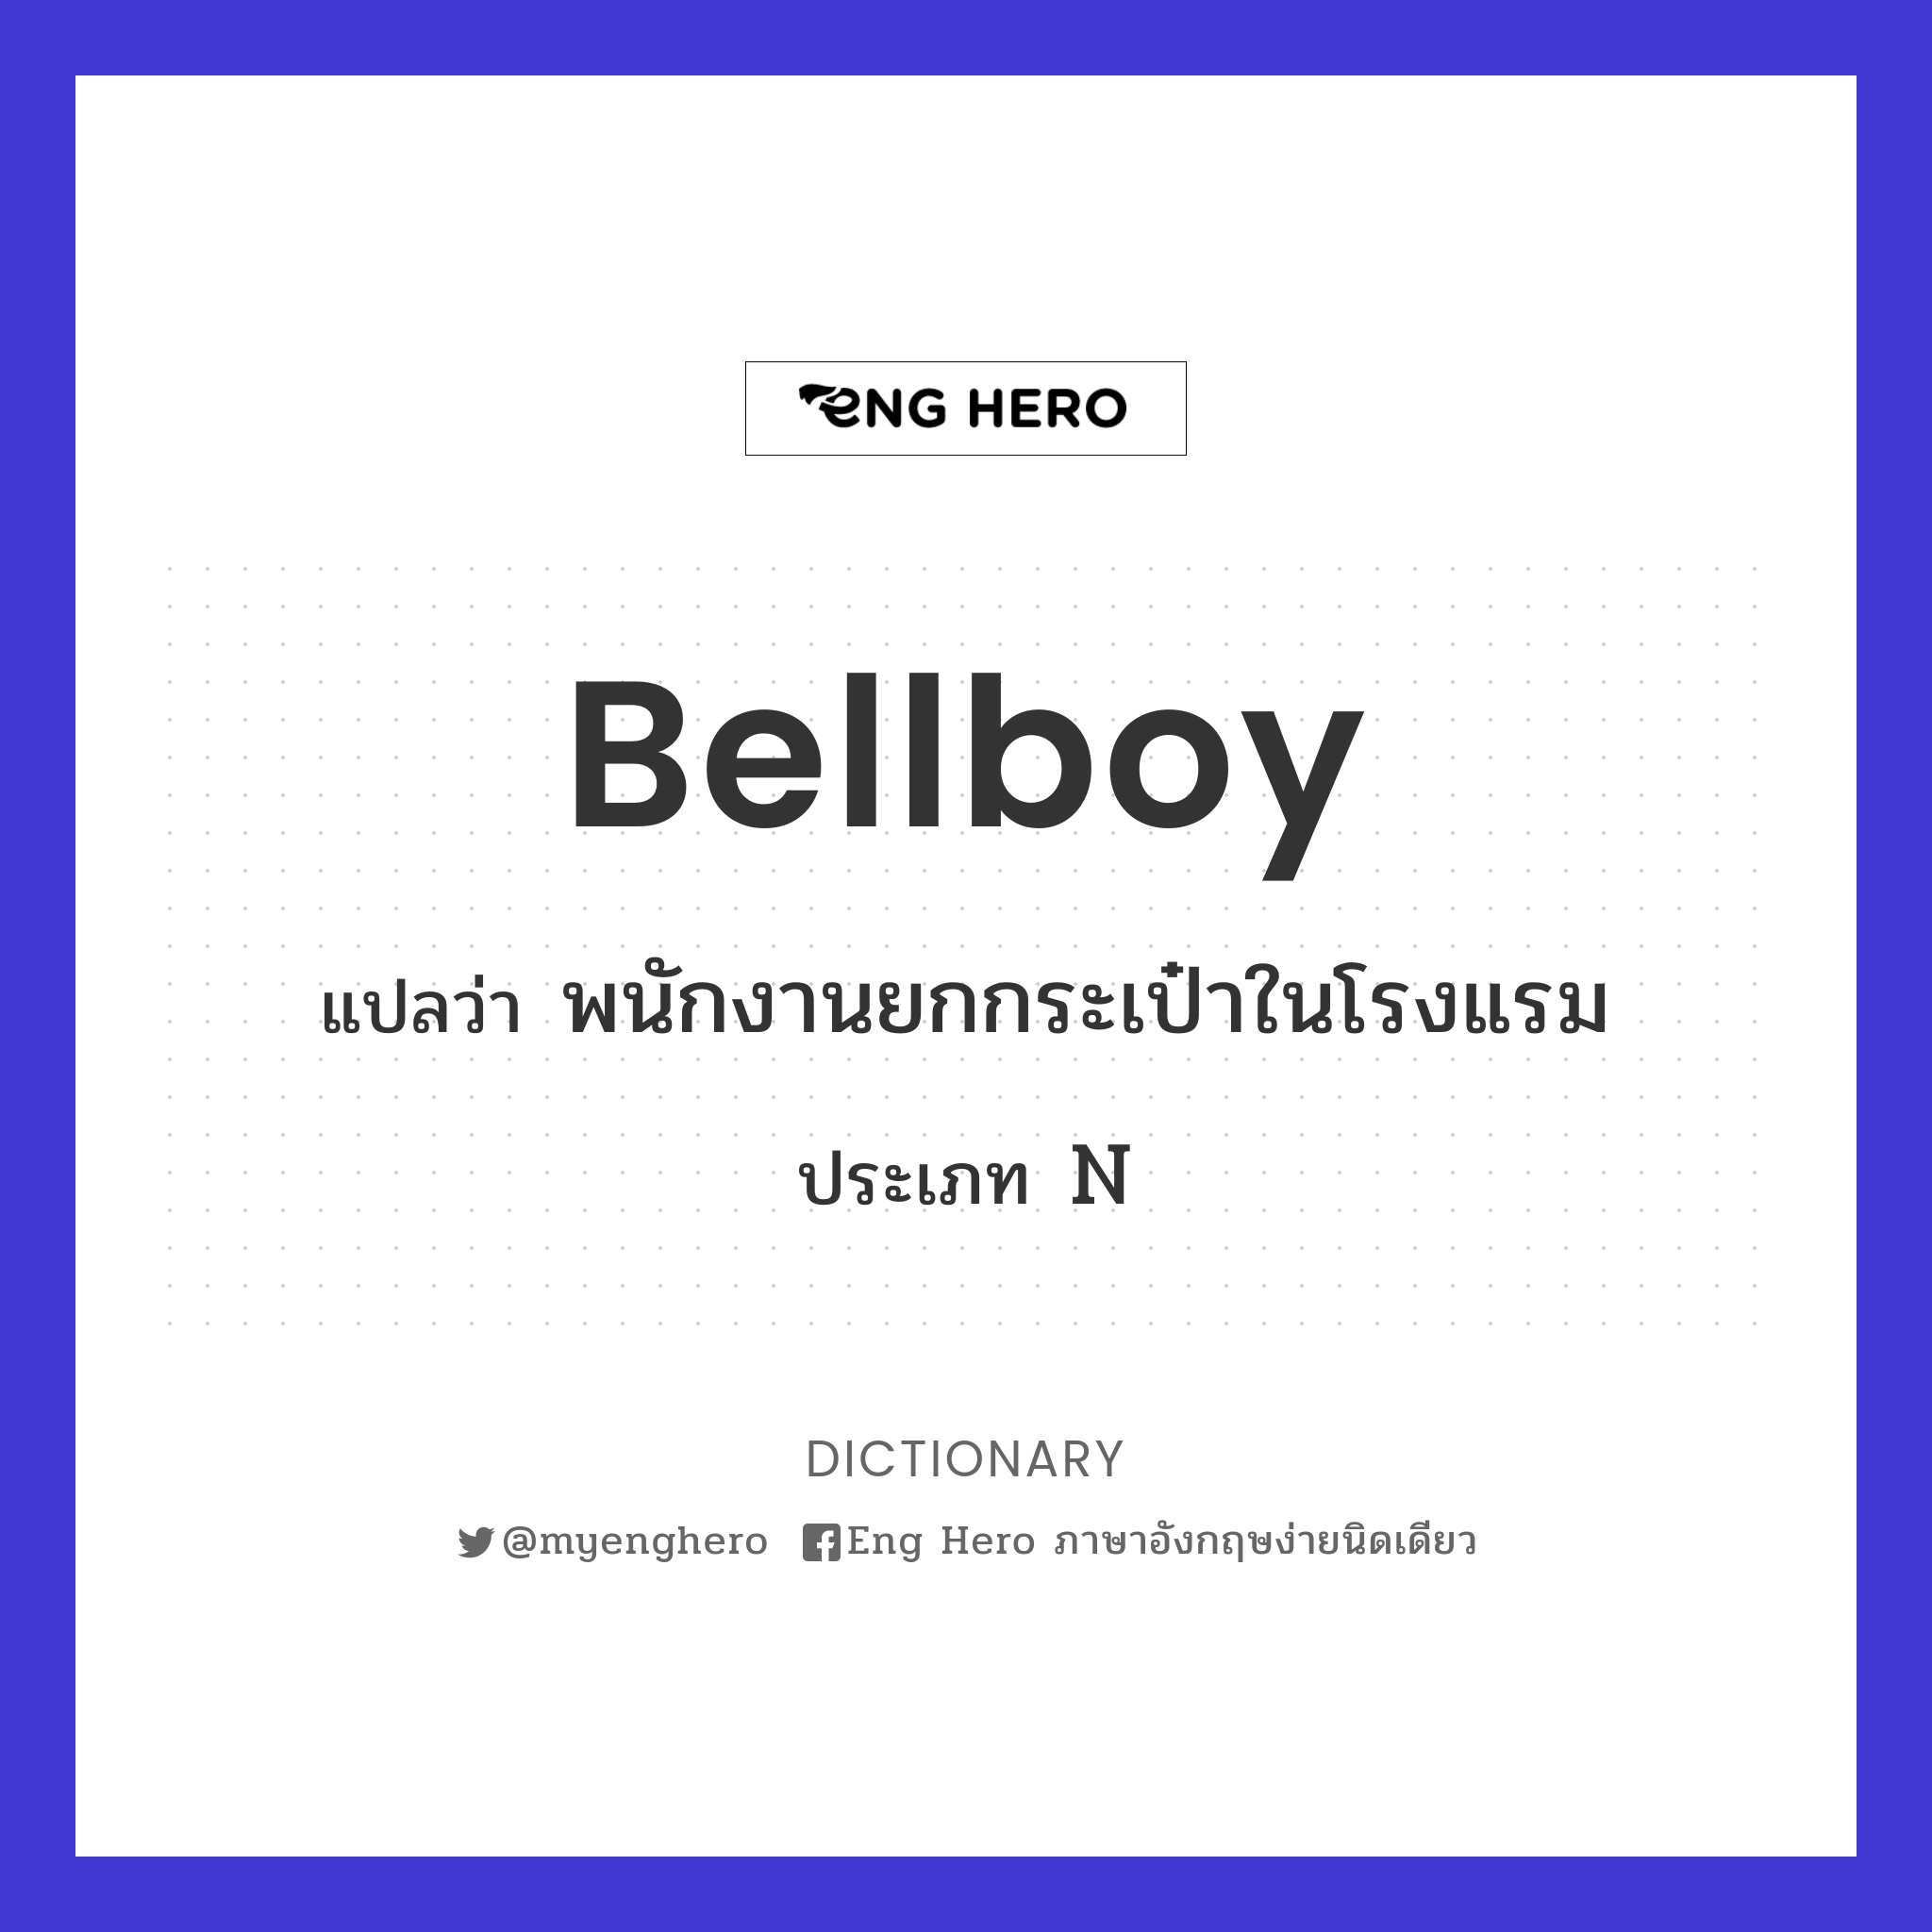 bellboy